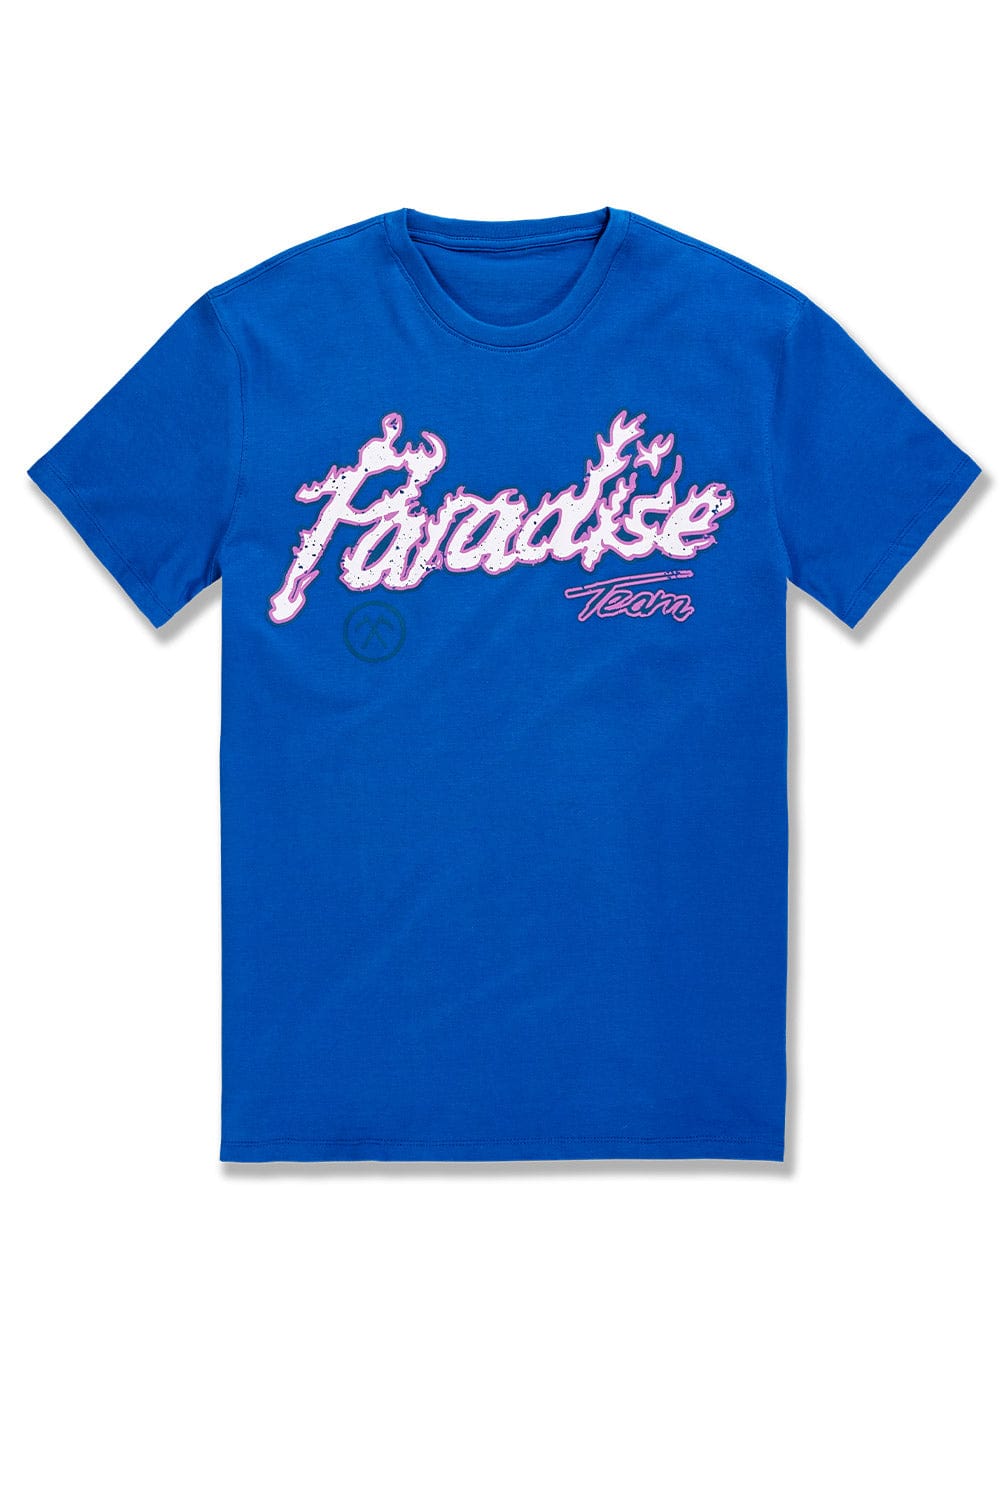 JC Big Men Big Men's Paradise Tour T-Shirt (Royal)